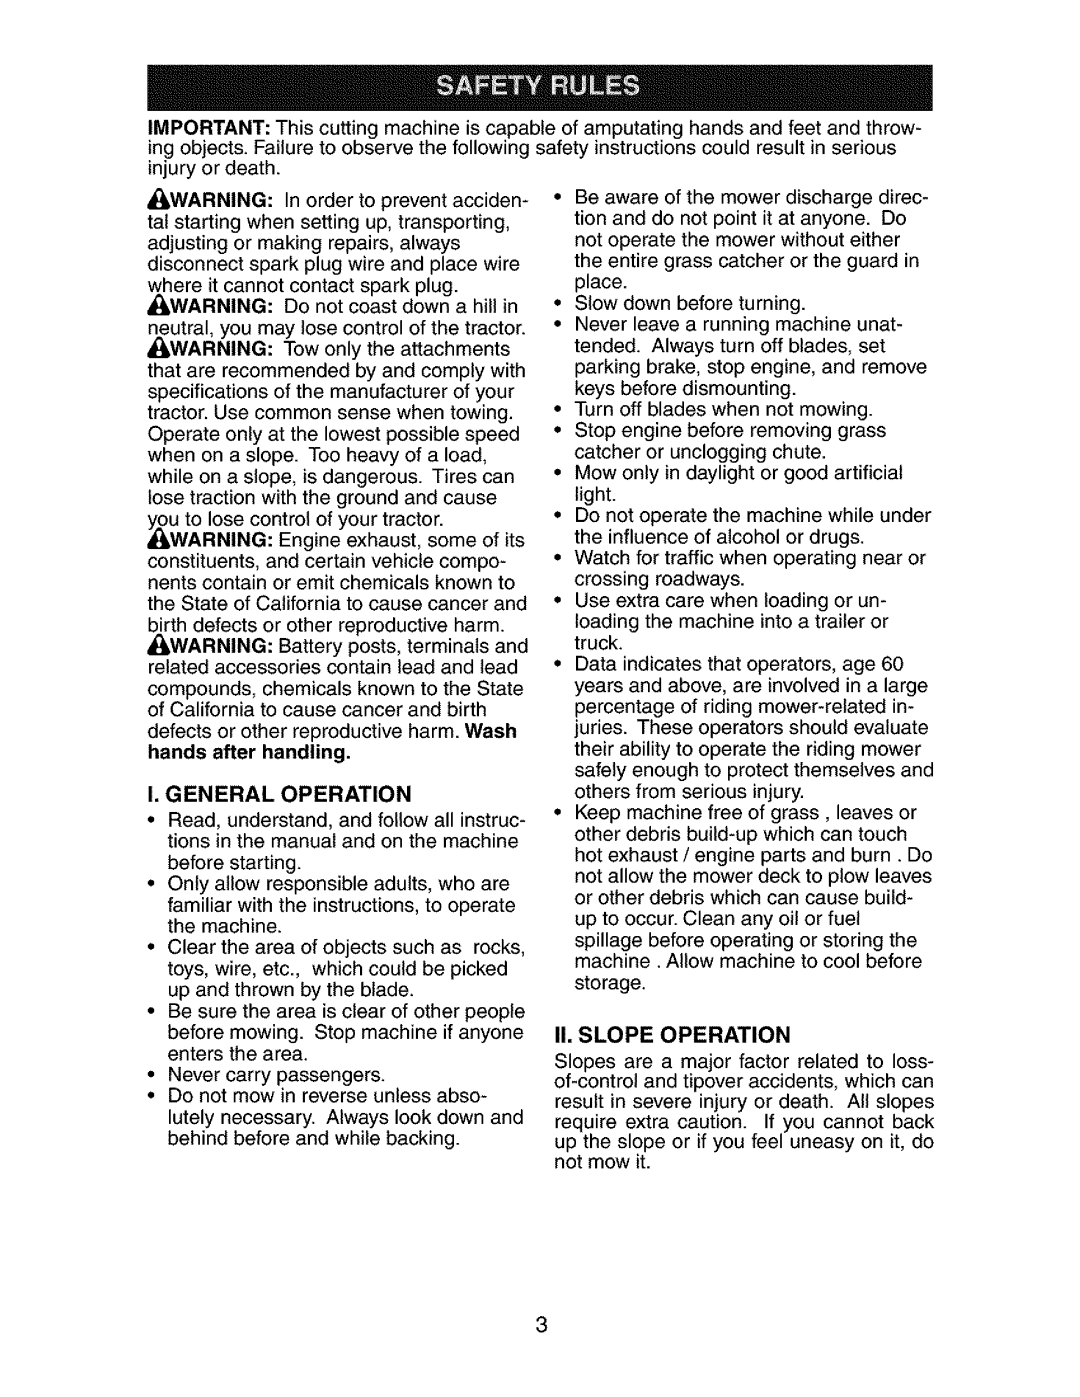 Craftsman 917.27377 manual I, General Operation, Ii, Slope Operation 